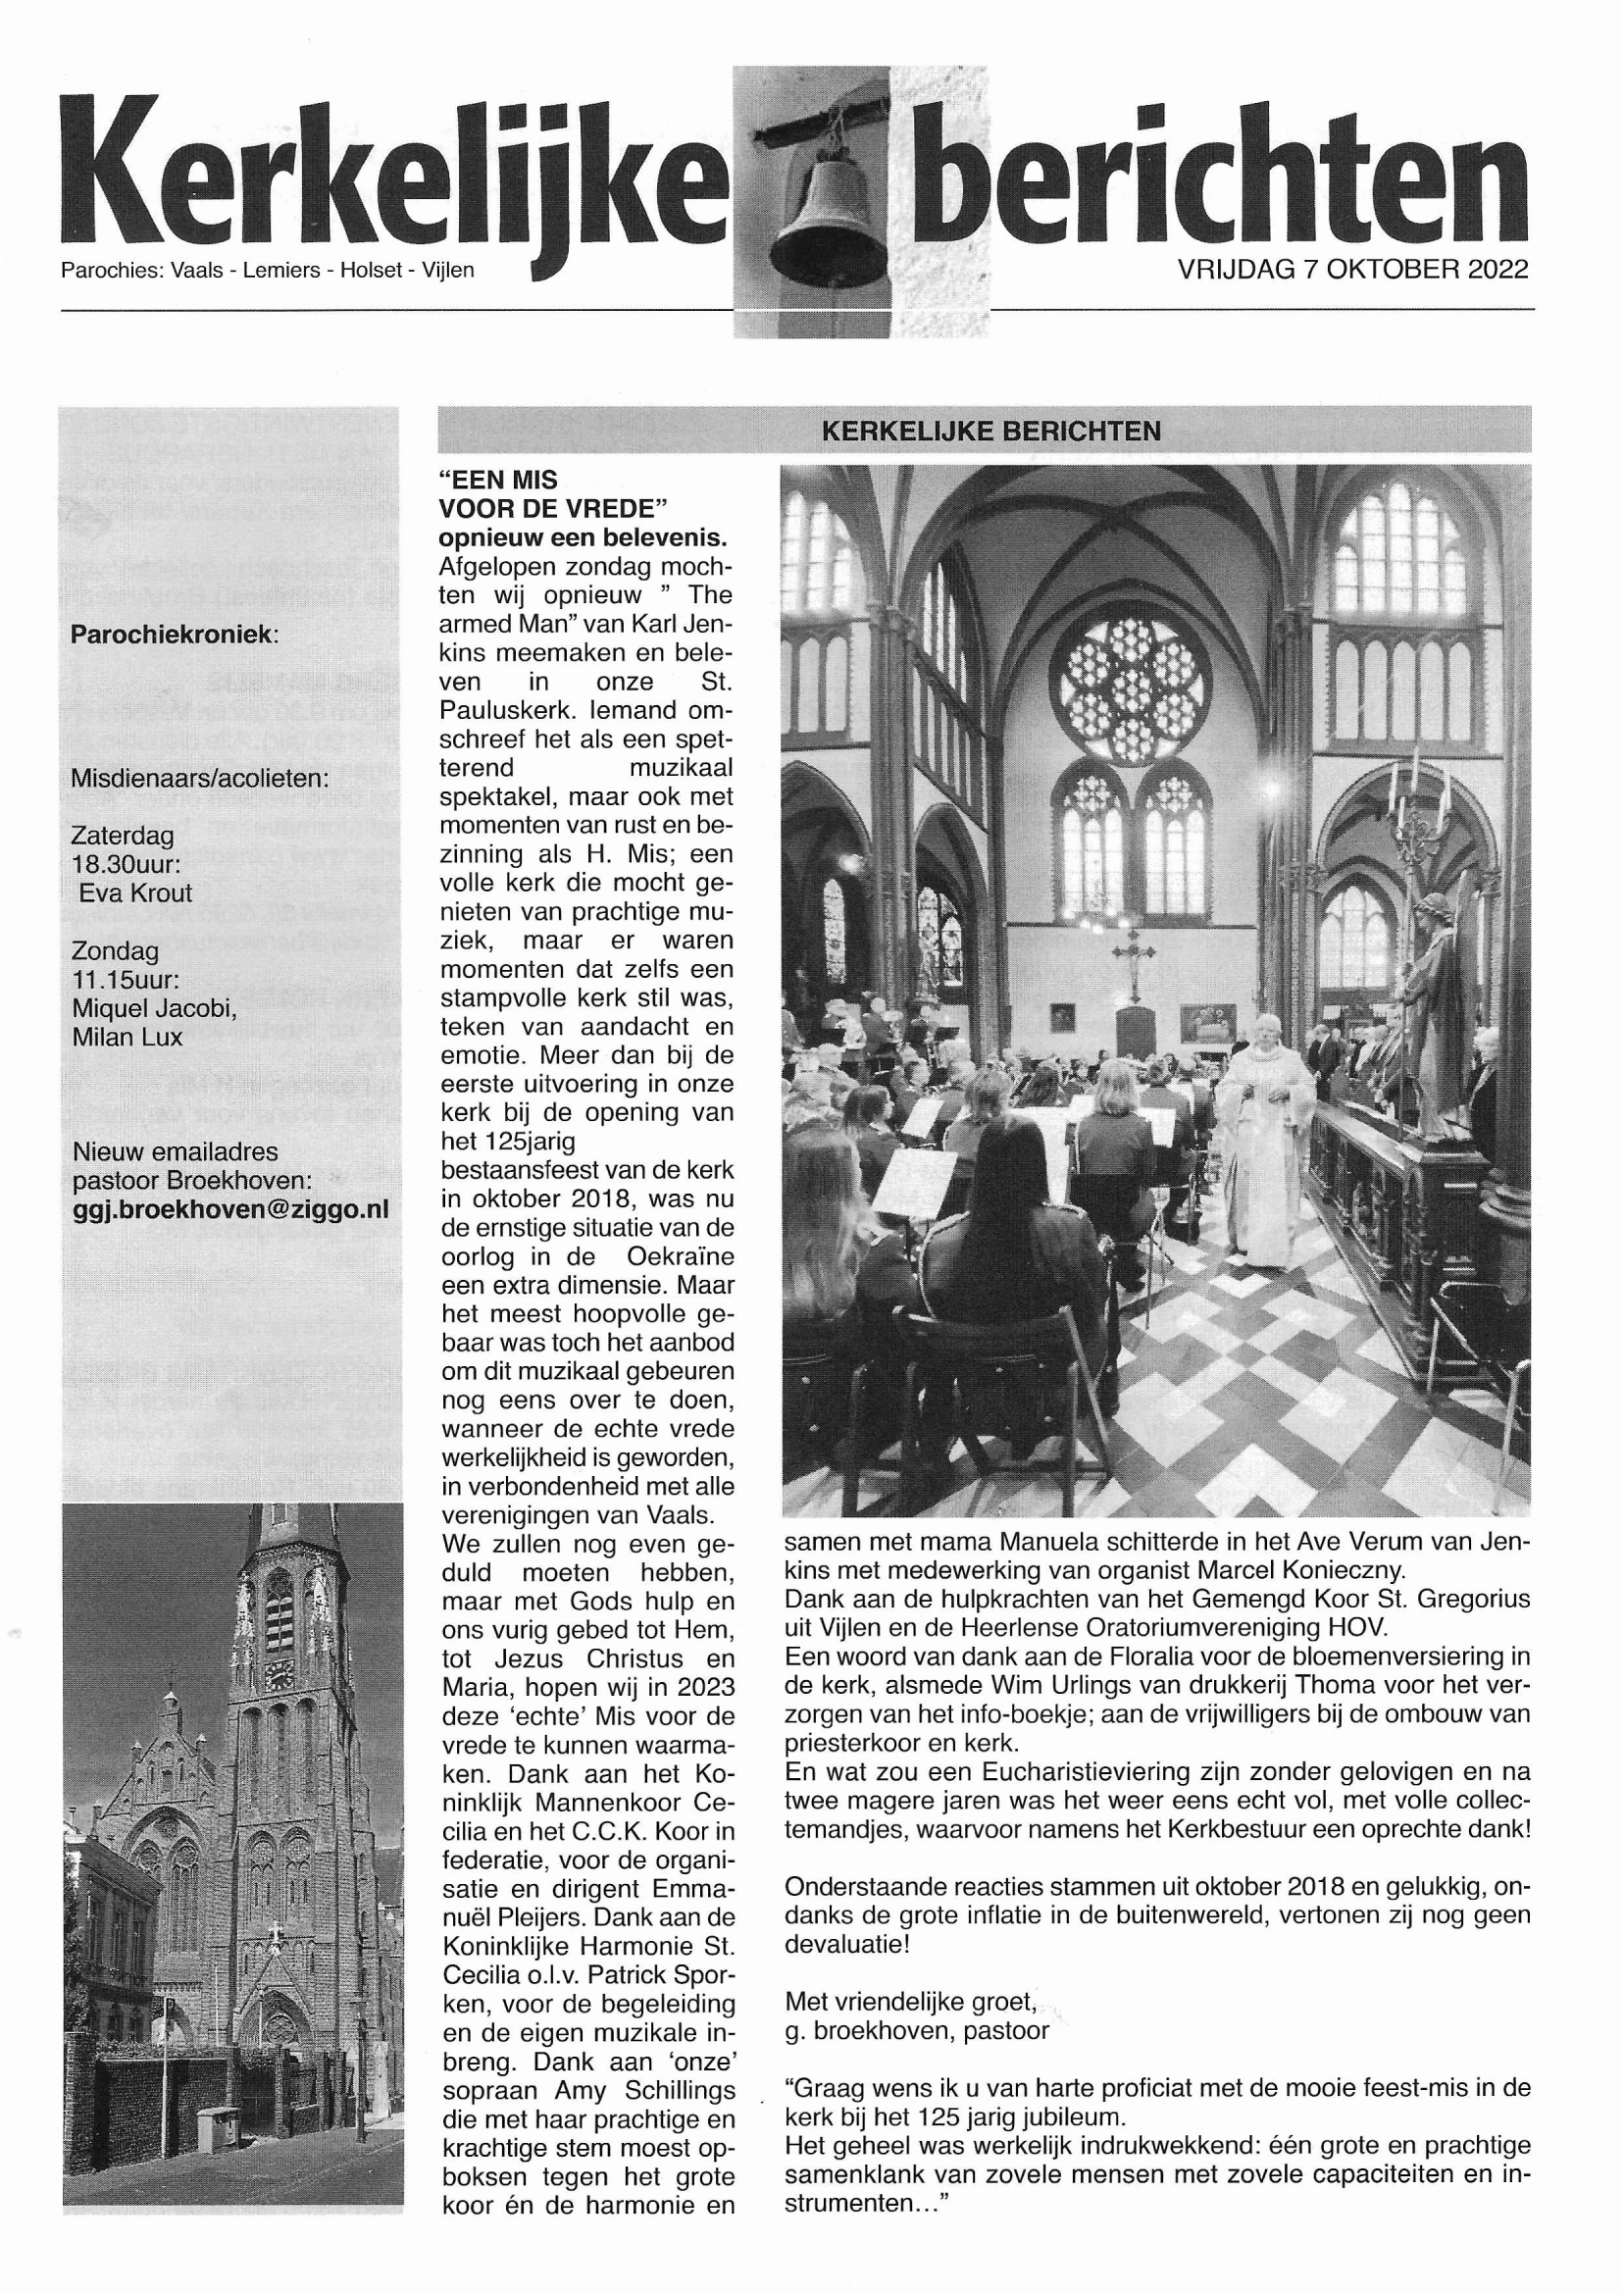 Vaalser Weekblad 07 oktober 2022 a Mass for Peace 1 Page 3